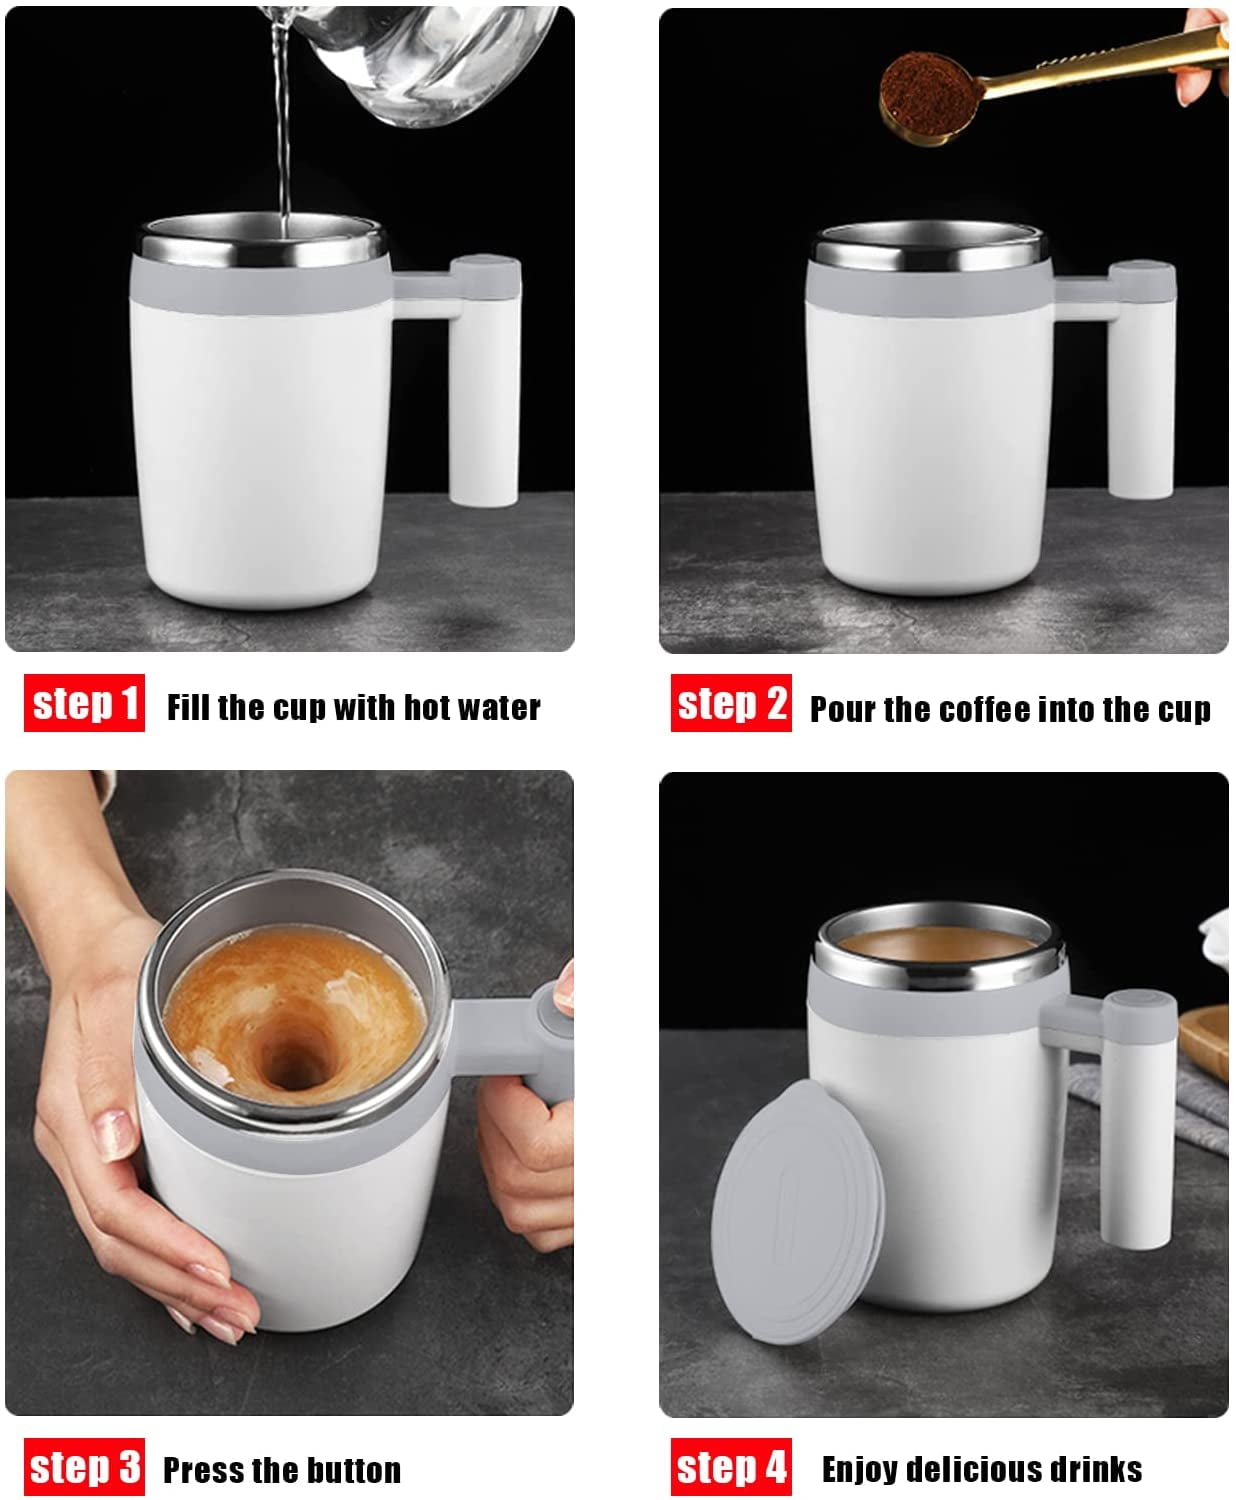 Self Stirring Coffee Mug, Self Mixing Coffee Mug,14Oz Stainless Steel  Insulated Reusable Coffee Cup,…See more Self Stirring Coffee Mug, Self  Mixing